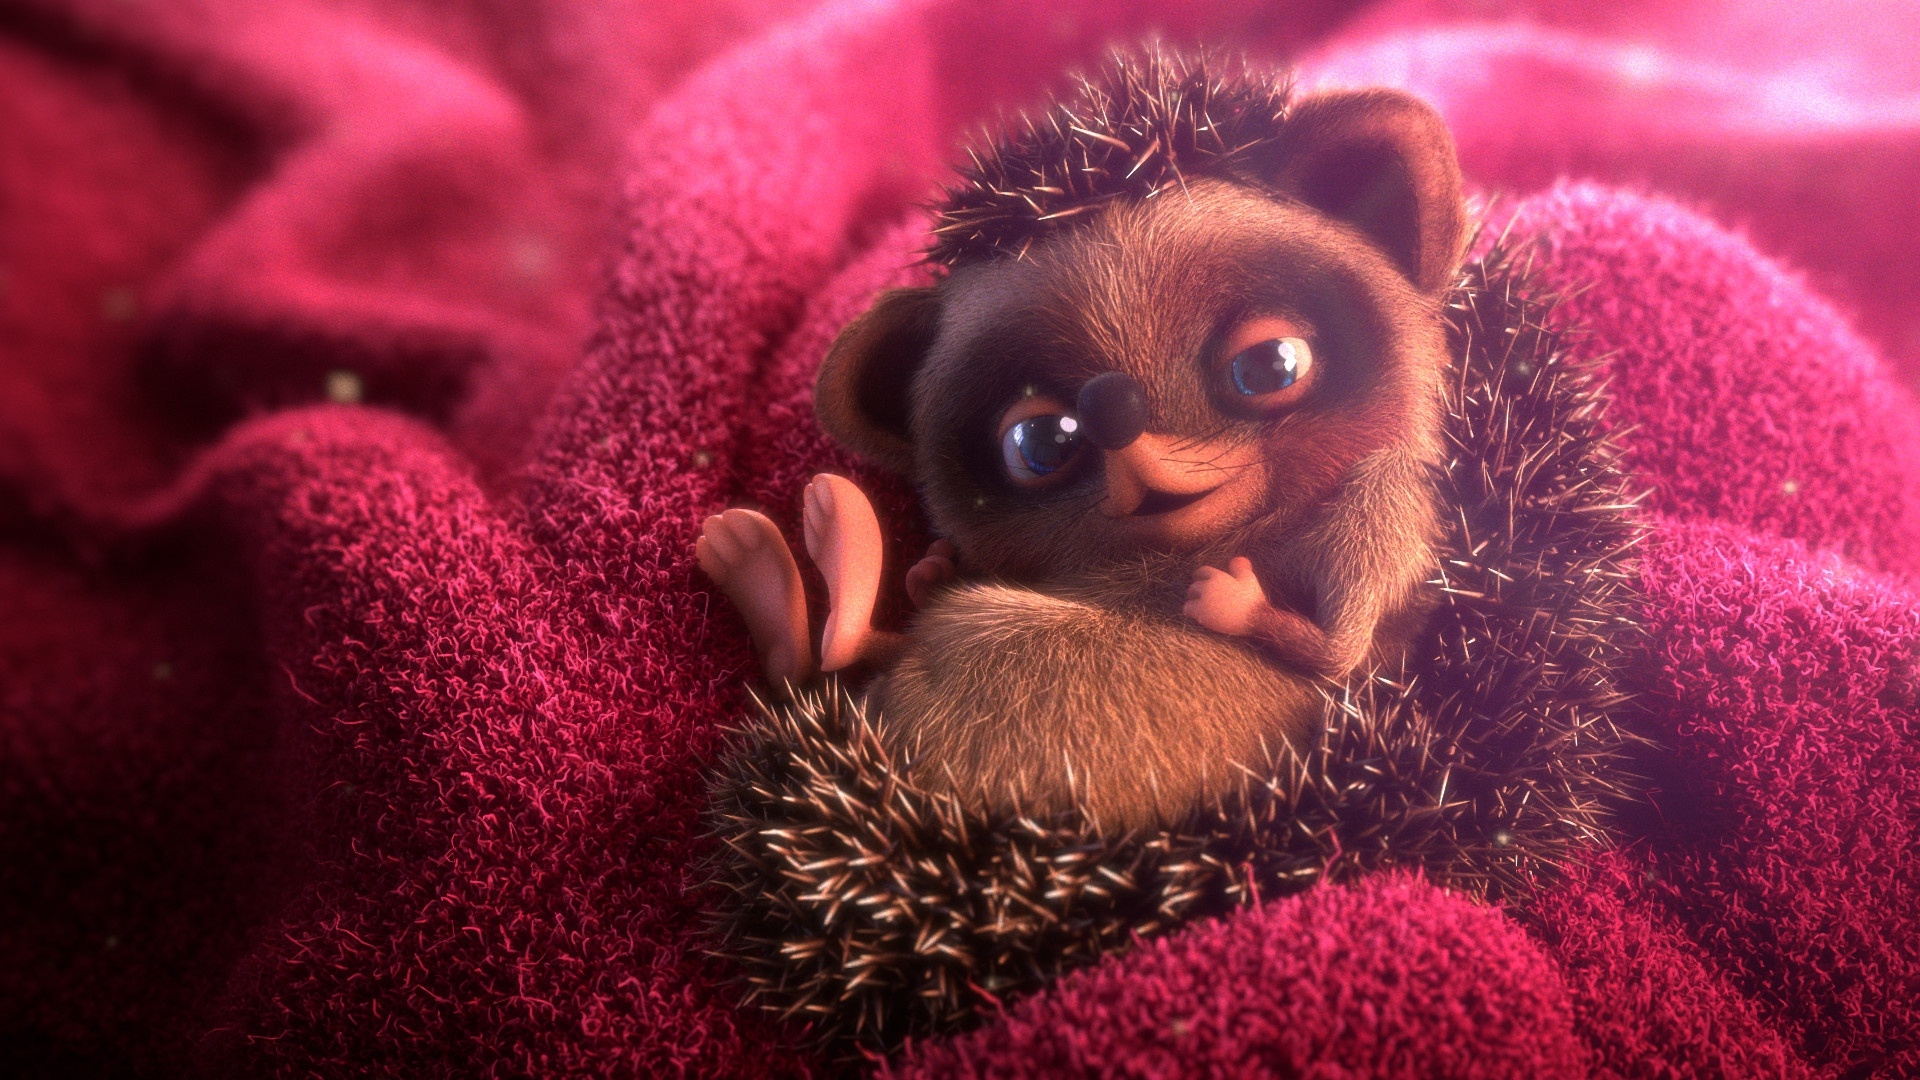 Cuddly Baby Hedgehog in a Blanket by Ludovic LIEME